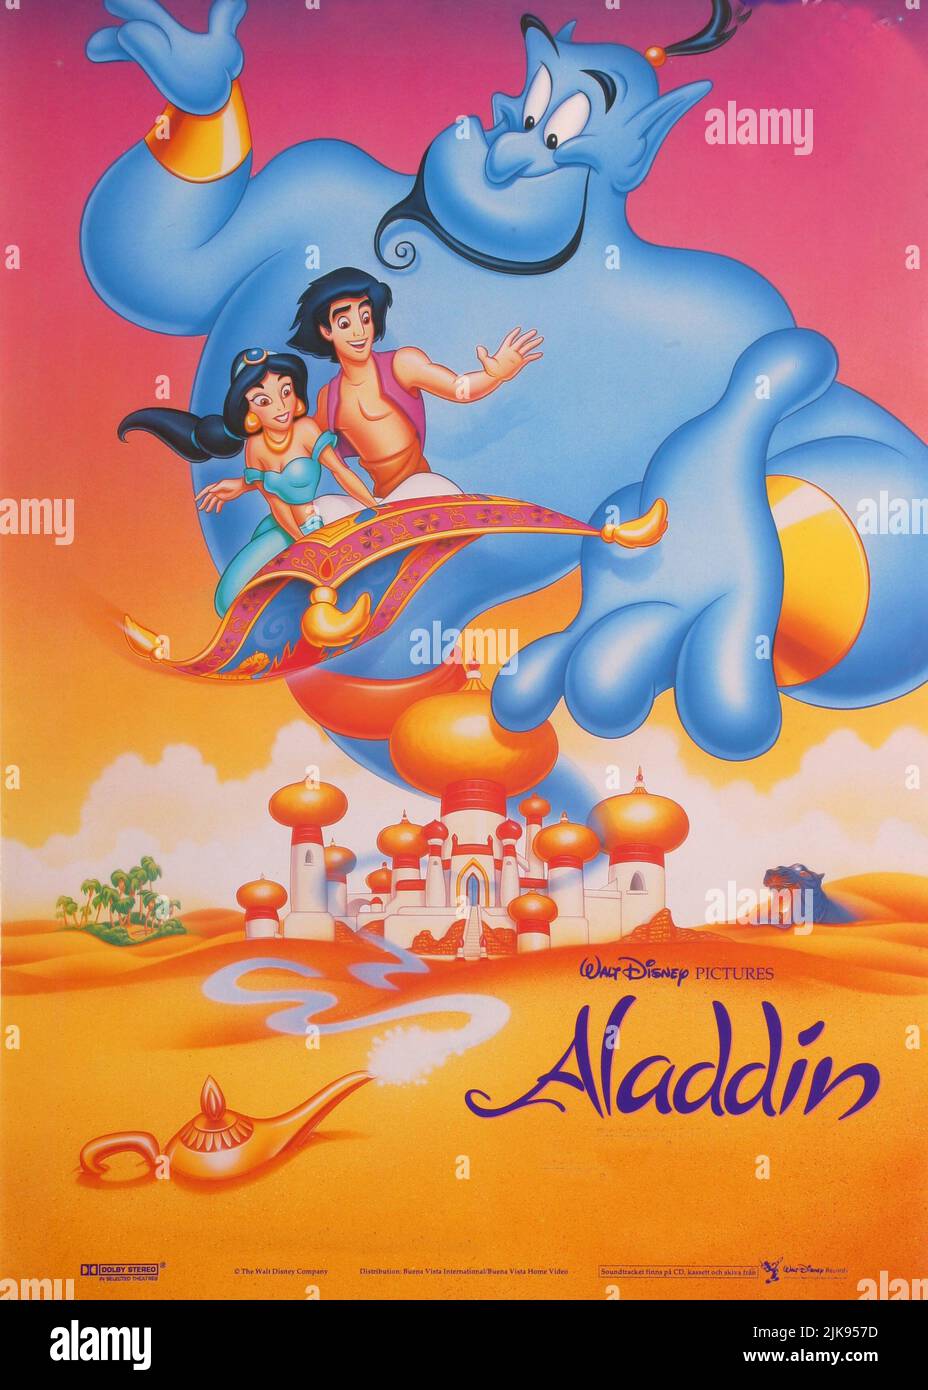 Princess jasmine aladdin -Fotos und -Bildmaterial in hoher Auflösung – Alamy